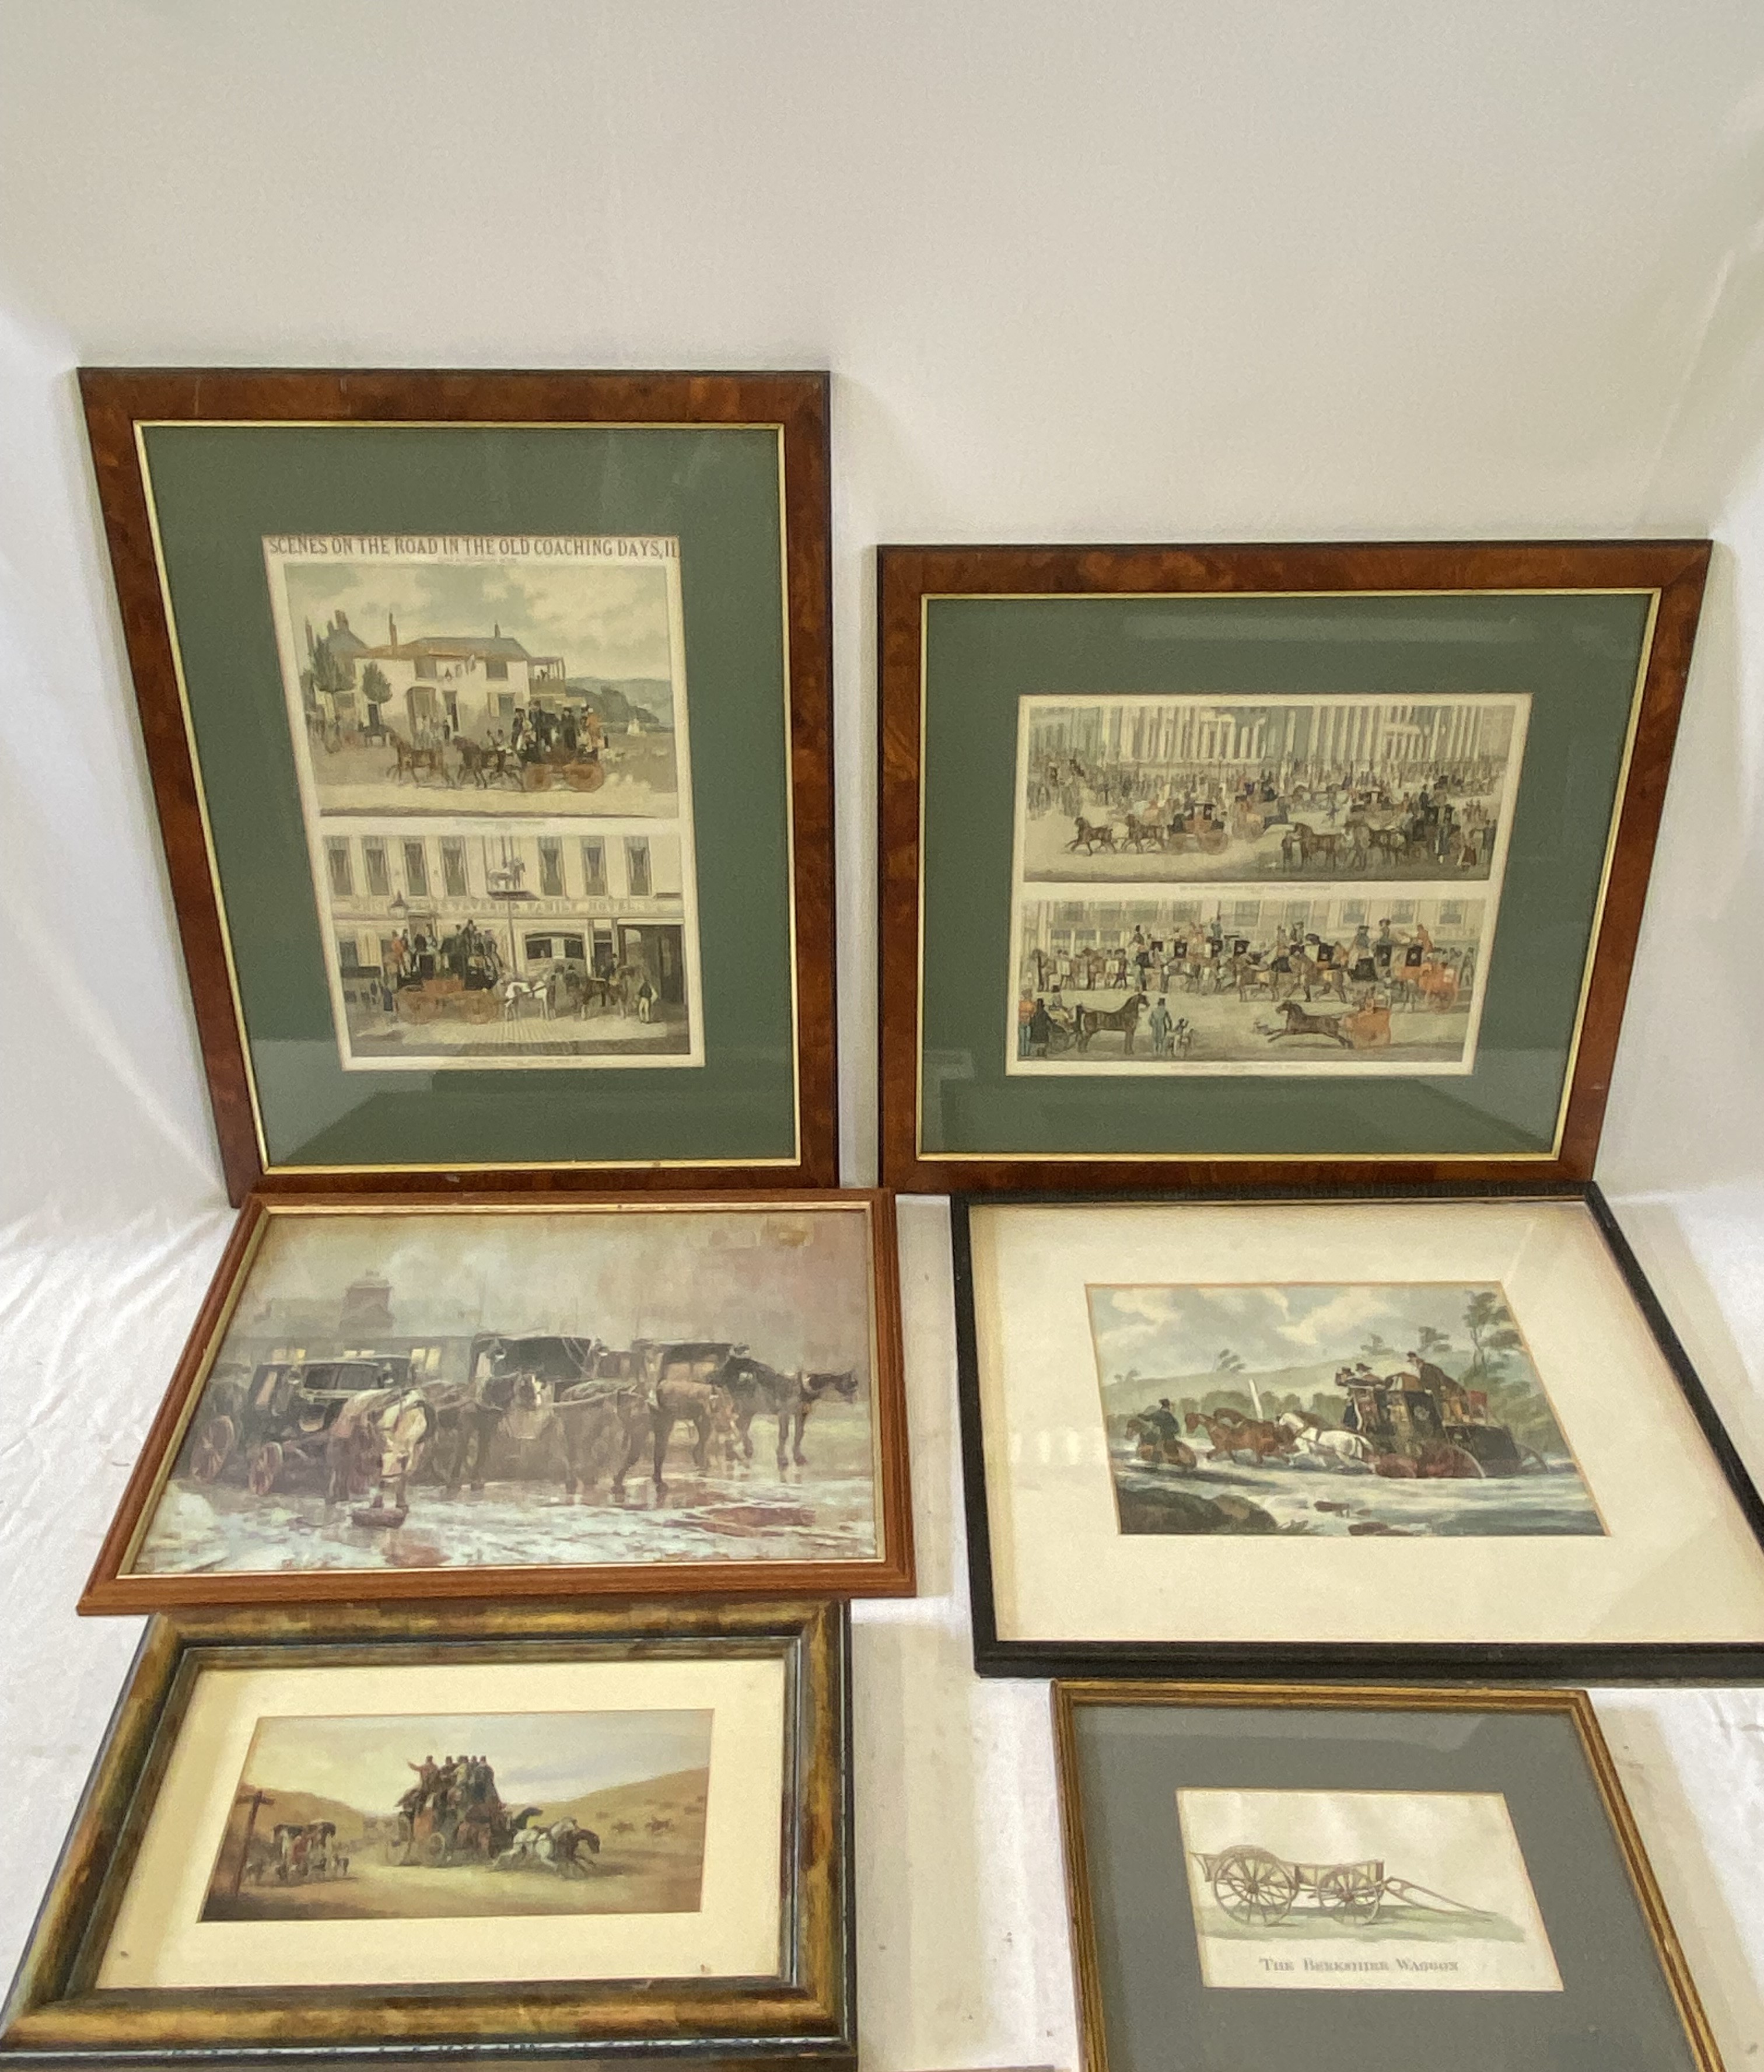 Two framed and glazed J Pollard coaching prints